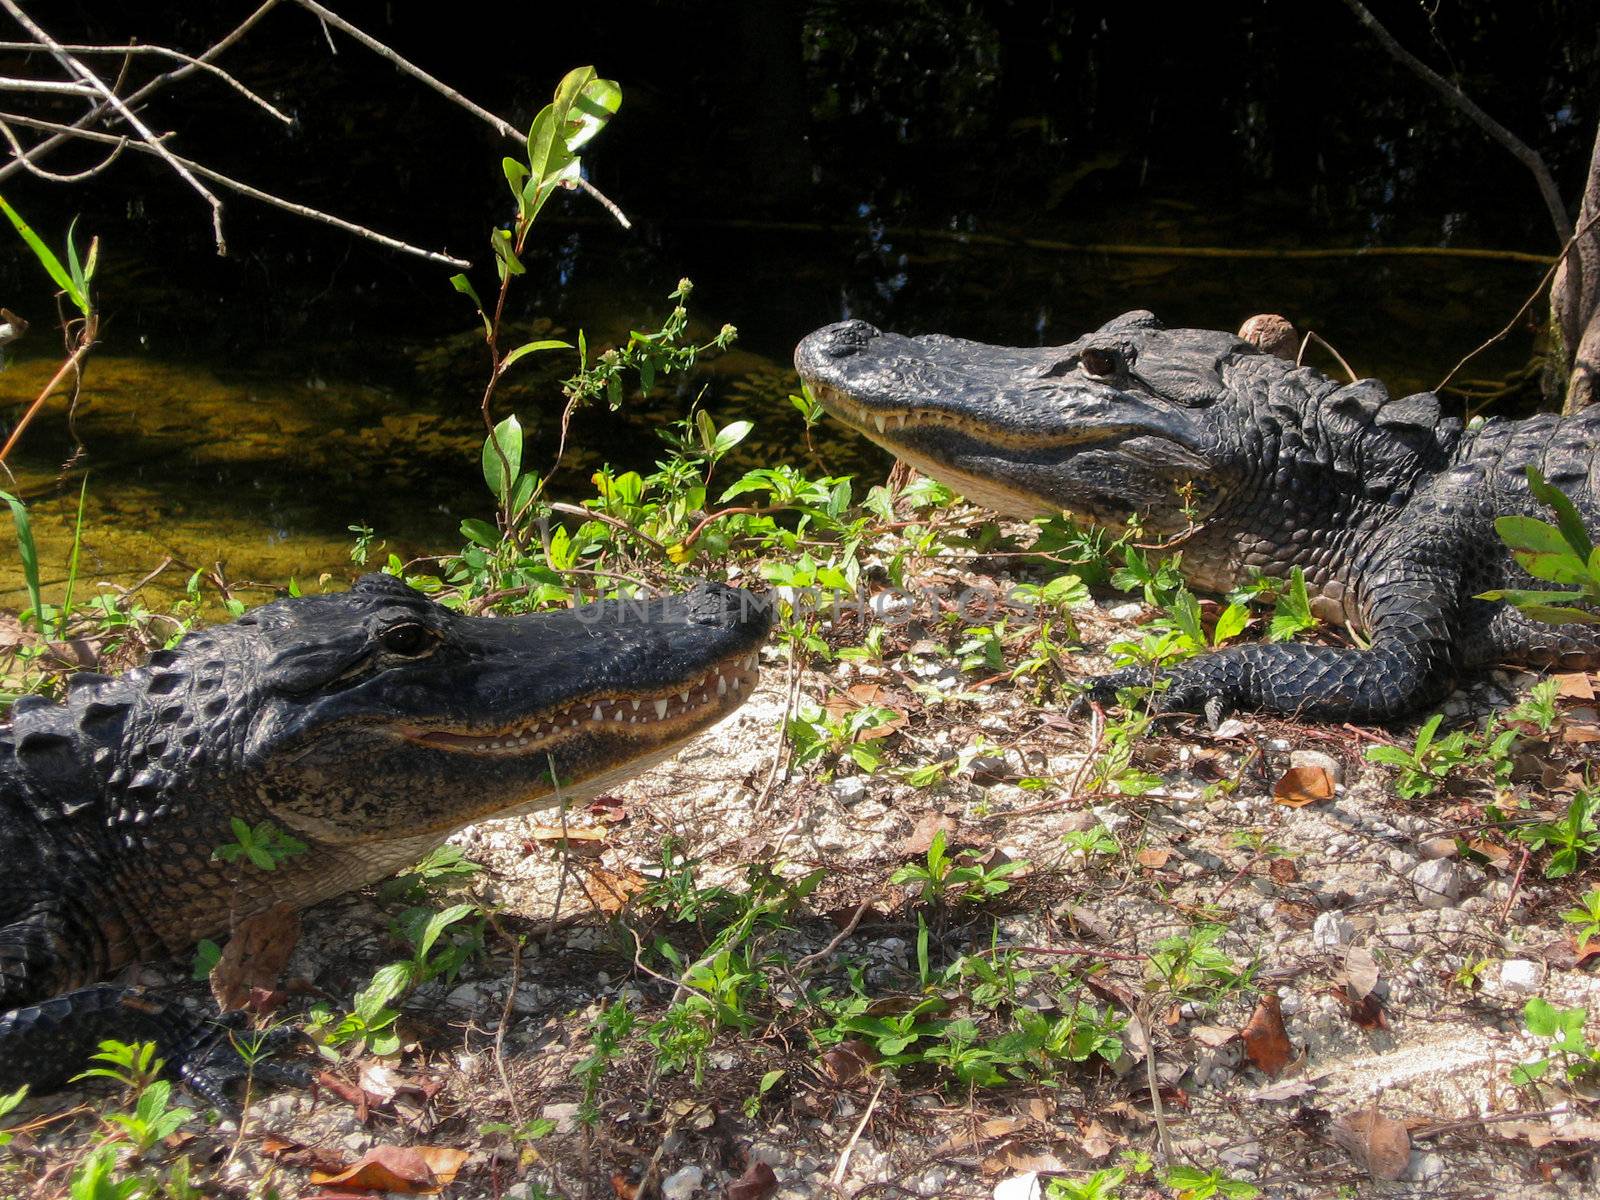 Pair of Alligators resting in Sun by PiLens